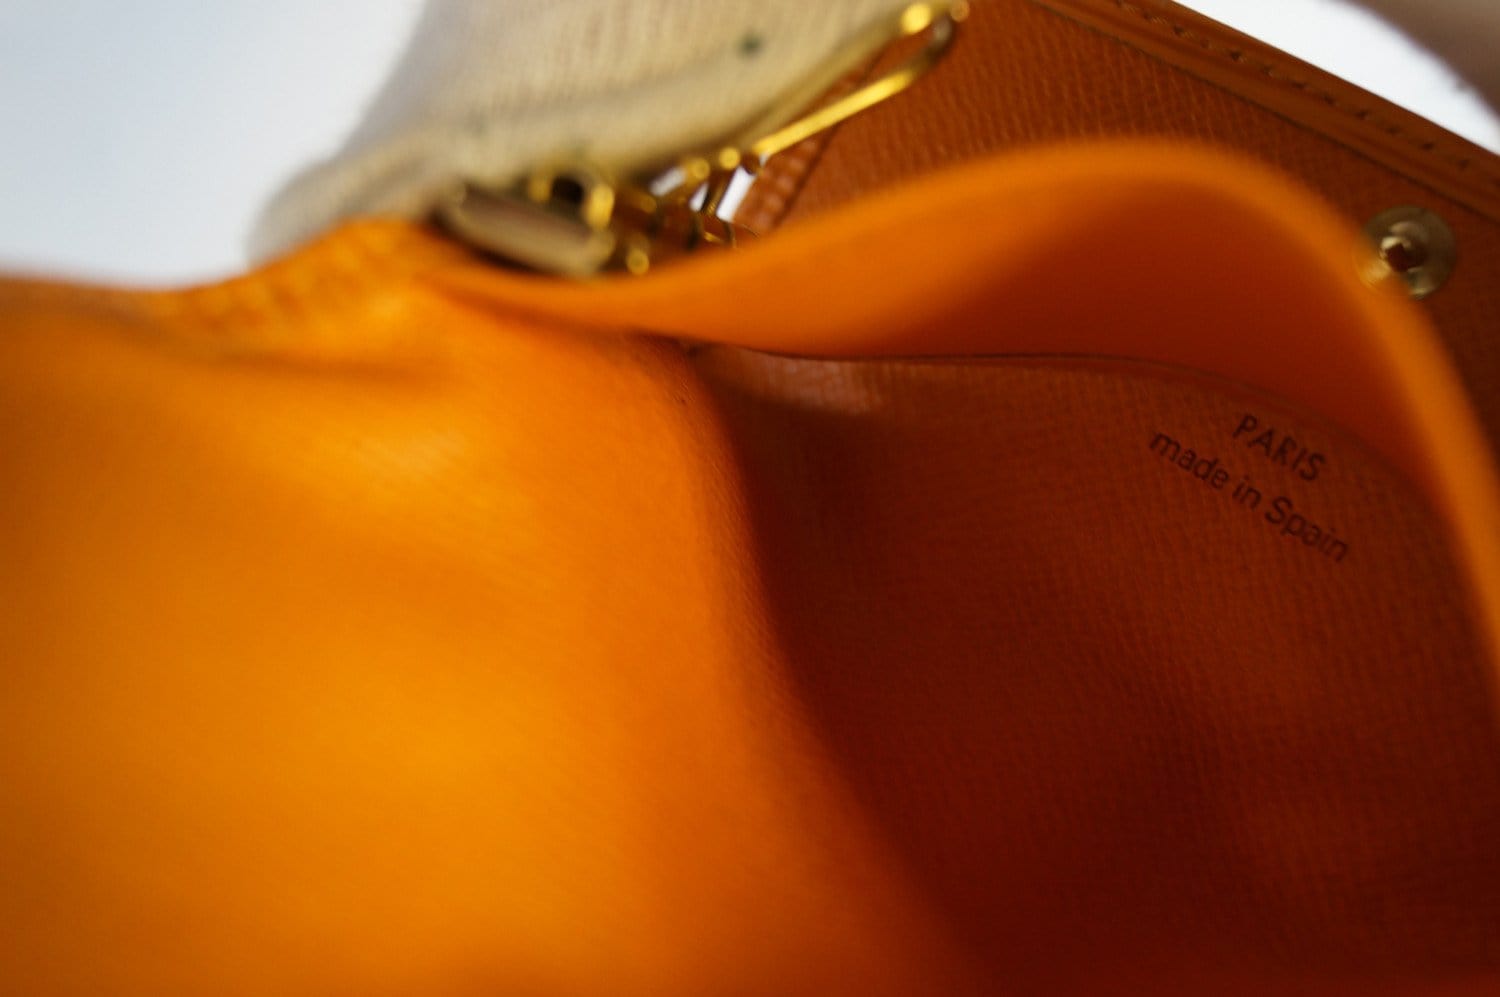 Louis Vuitton Epi Blue Leather 4 Brass Key Holder Wallet Button Closure  Spain